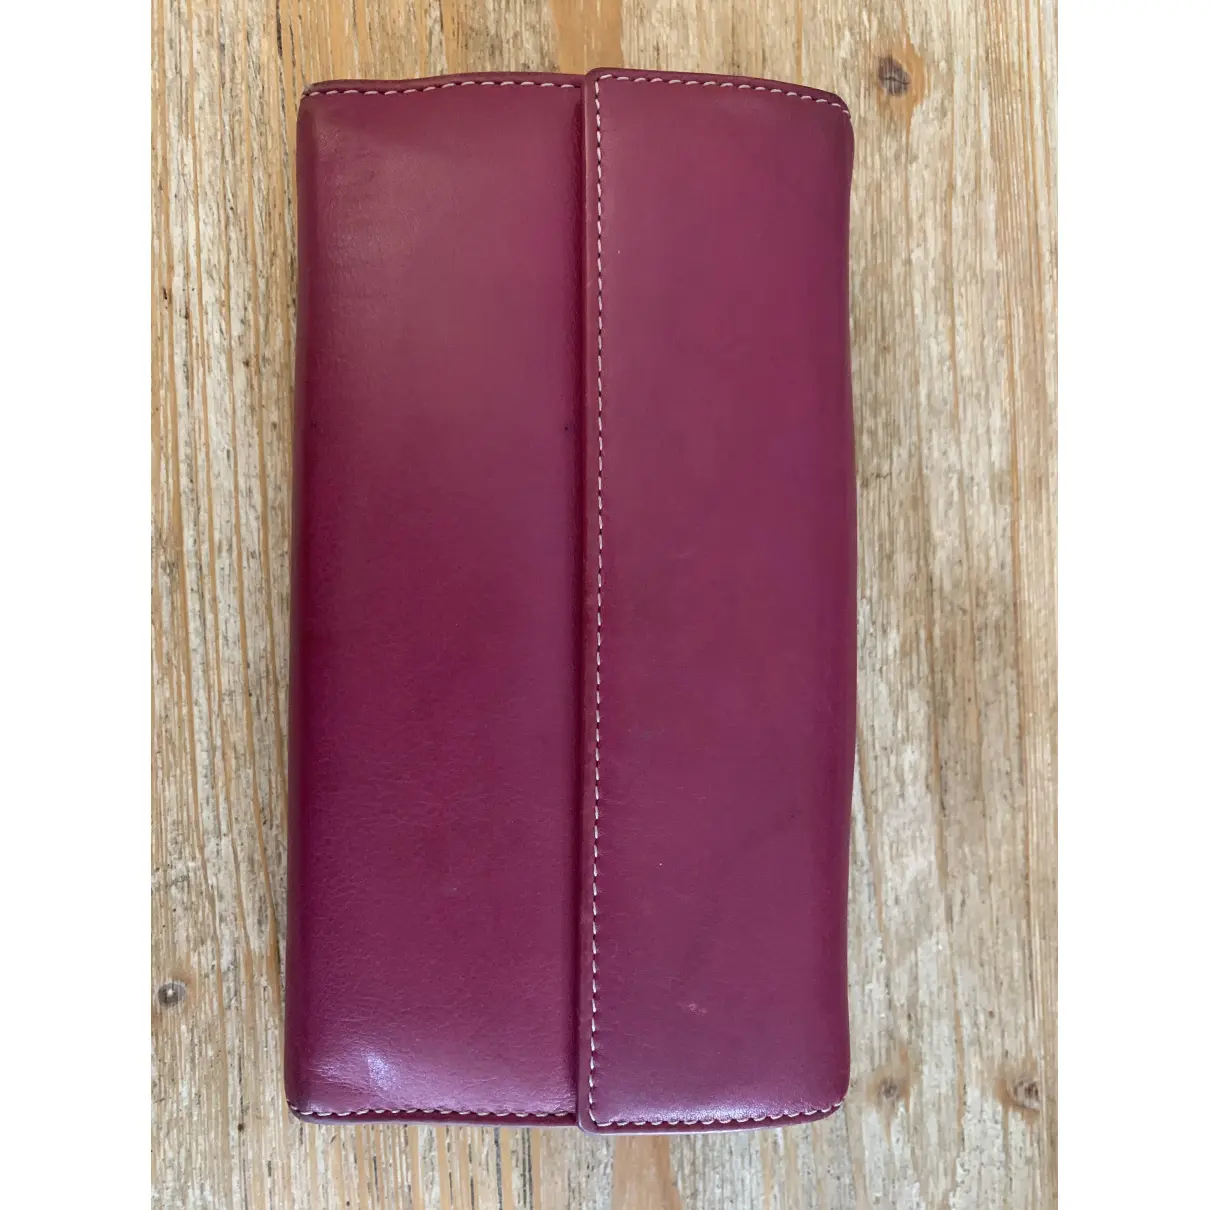 Buy Balmain Leather wallet online